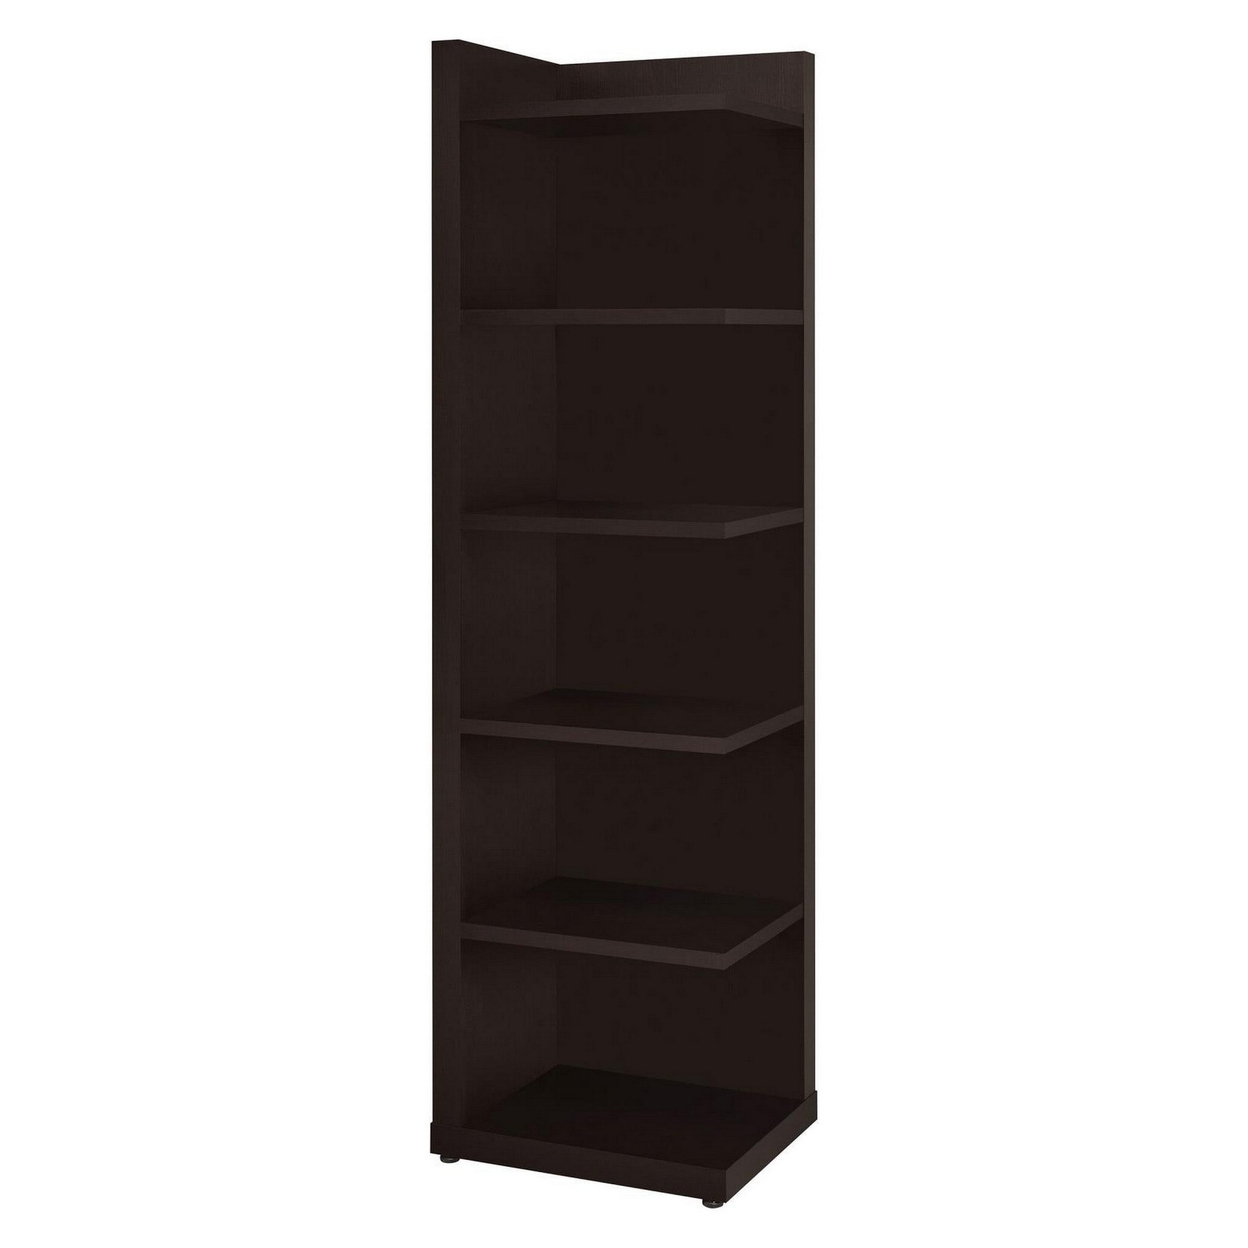 Radiant Brown Wooden Corner Bookcase- Saltoro Sherpi